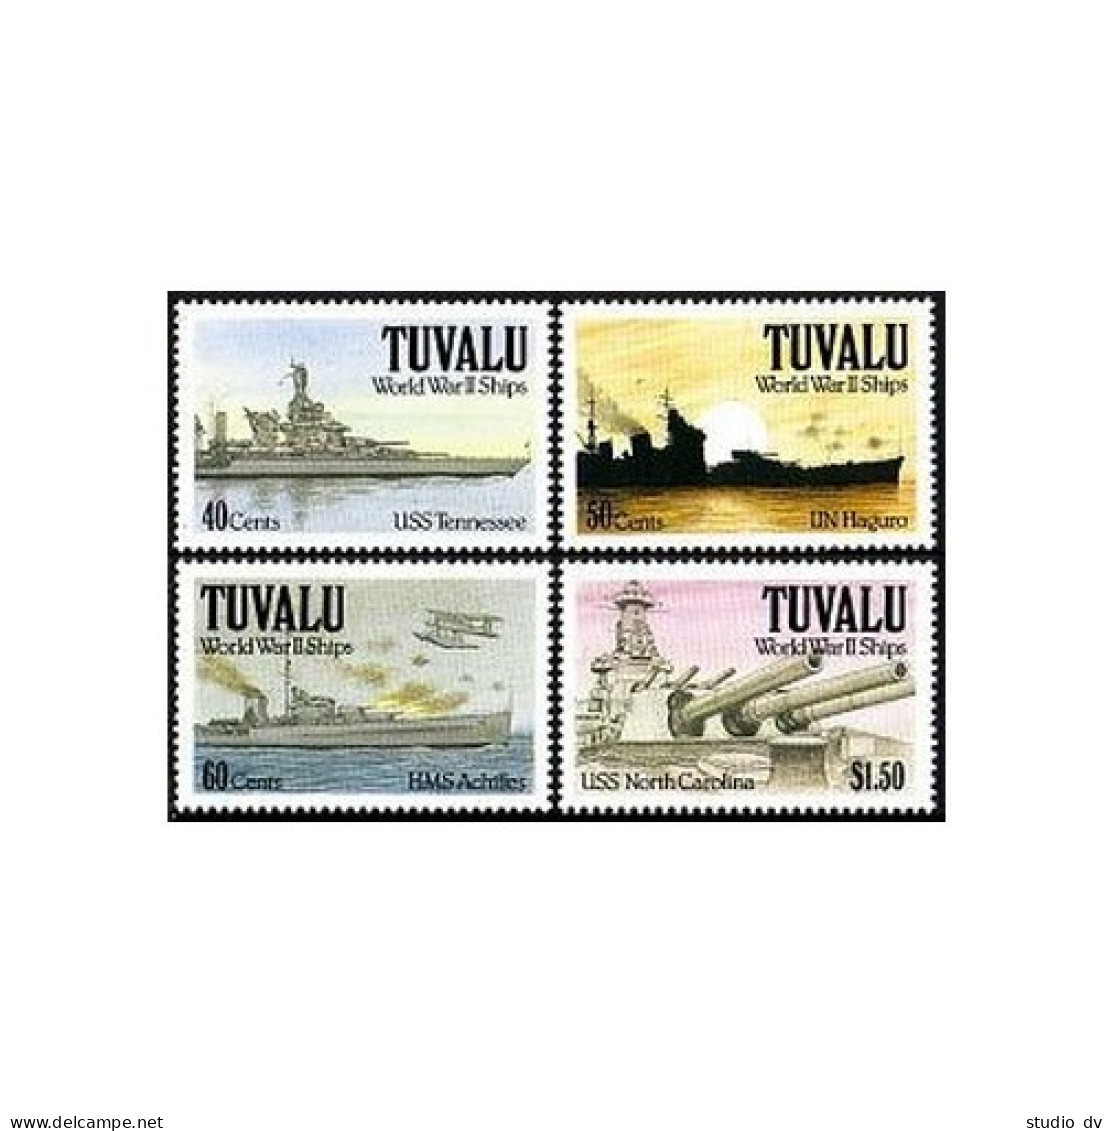 Tuvalu 578-581, MNH. Michel 599-602. World War II Ships, 1991. Tennessee,Haguro, - Tuvalu